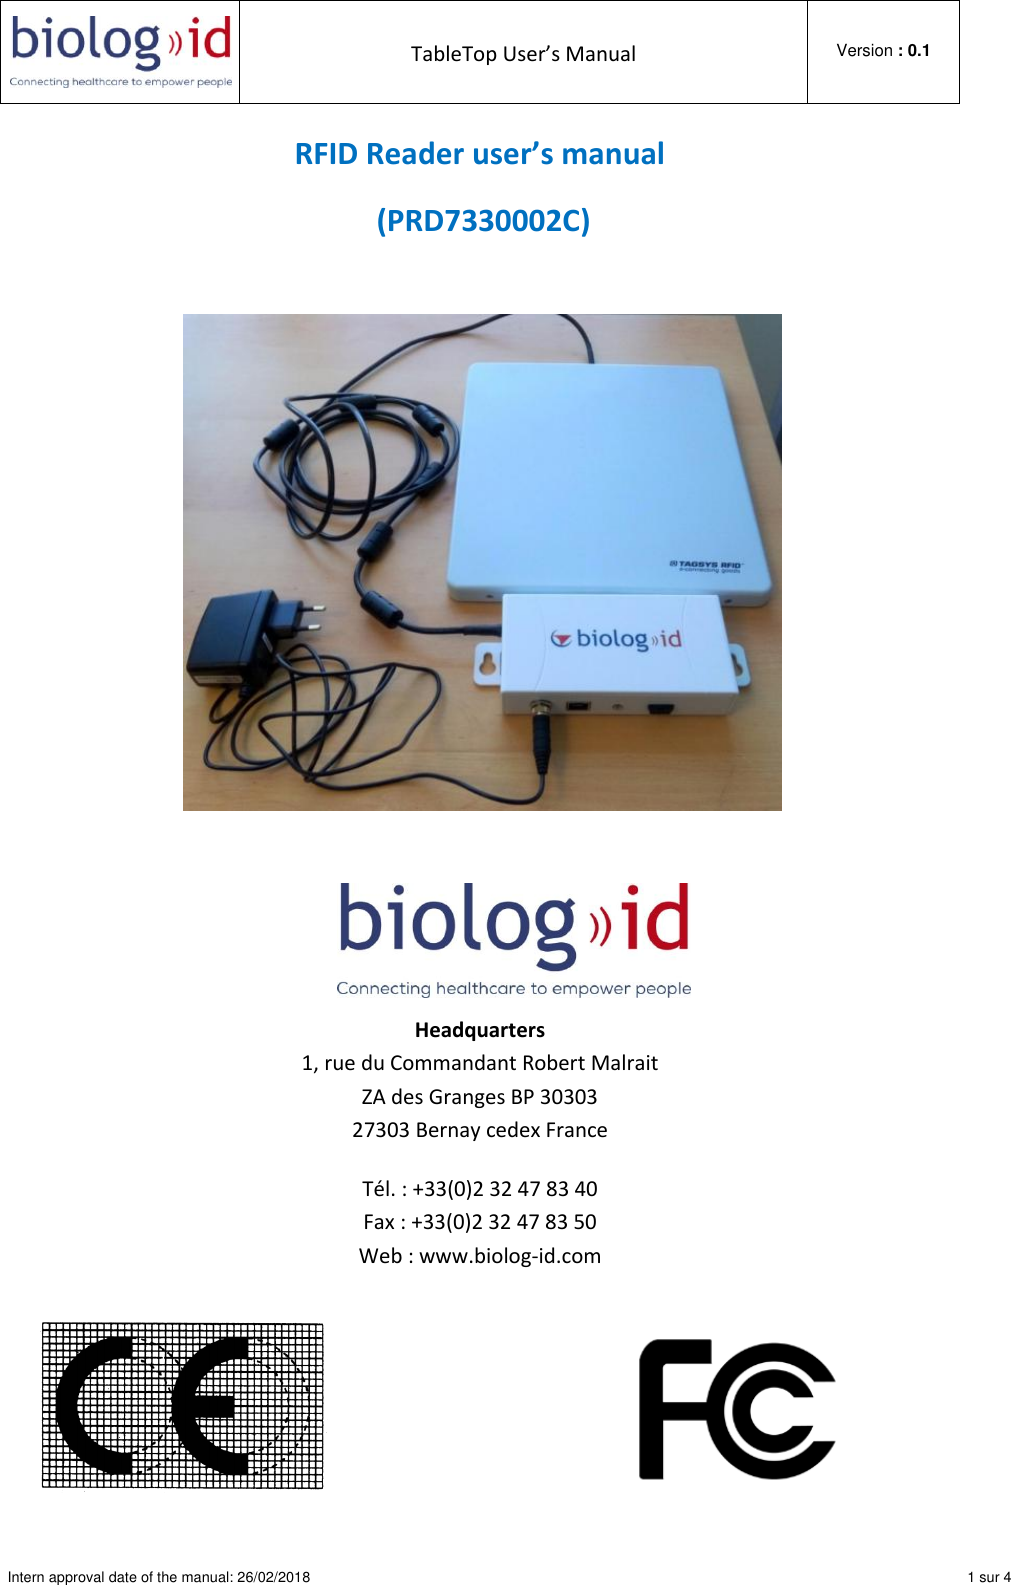  TableTop User’s Manual  Version : 0.1  Intern approval date of the manual: 26/02/2018    1 sur 4  RFID Reader user’s manual  (PRD7330002C)       Headquarters 1, rue du Commandant Robert Malrait ZA des Granges BP 30303 27303 Bernay cedex France Tél. : +33(0)2 32 47 83 40 Fax : +33(0)2 32 47 83 50 Web : www.biolog-id.com                                                          